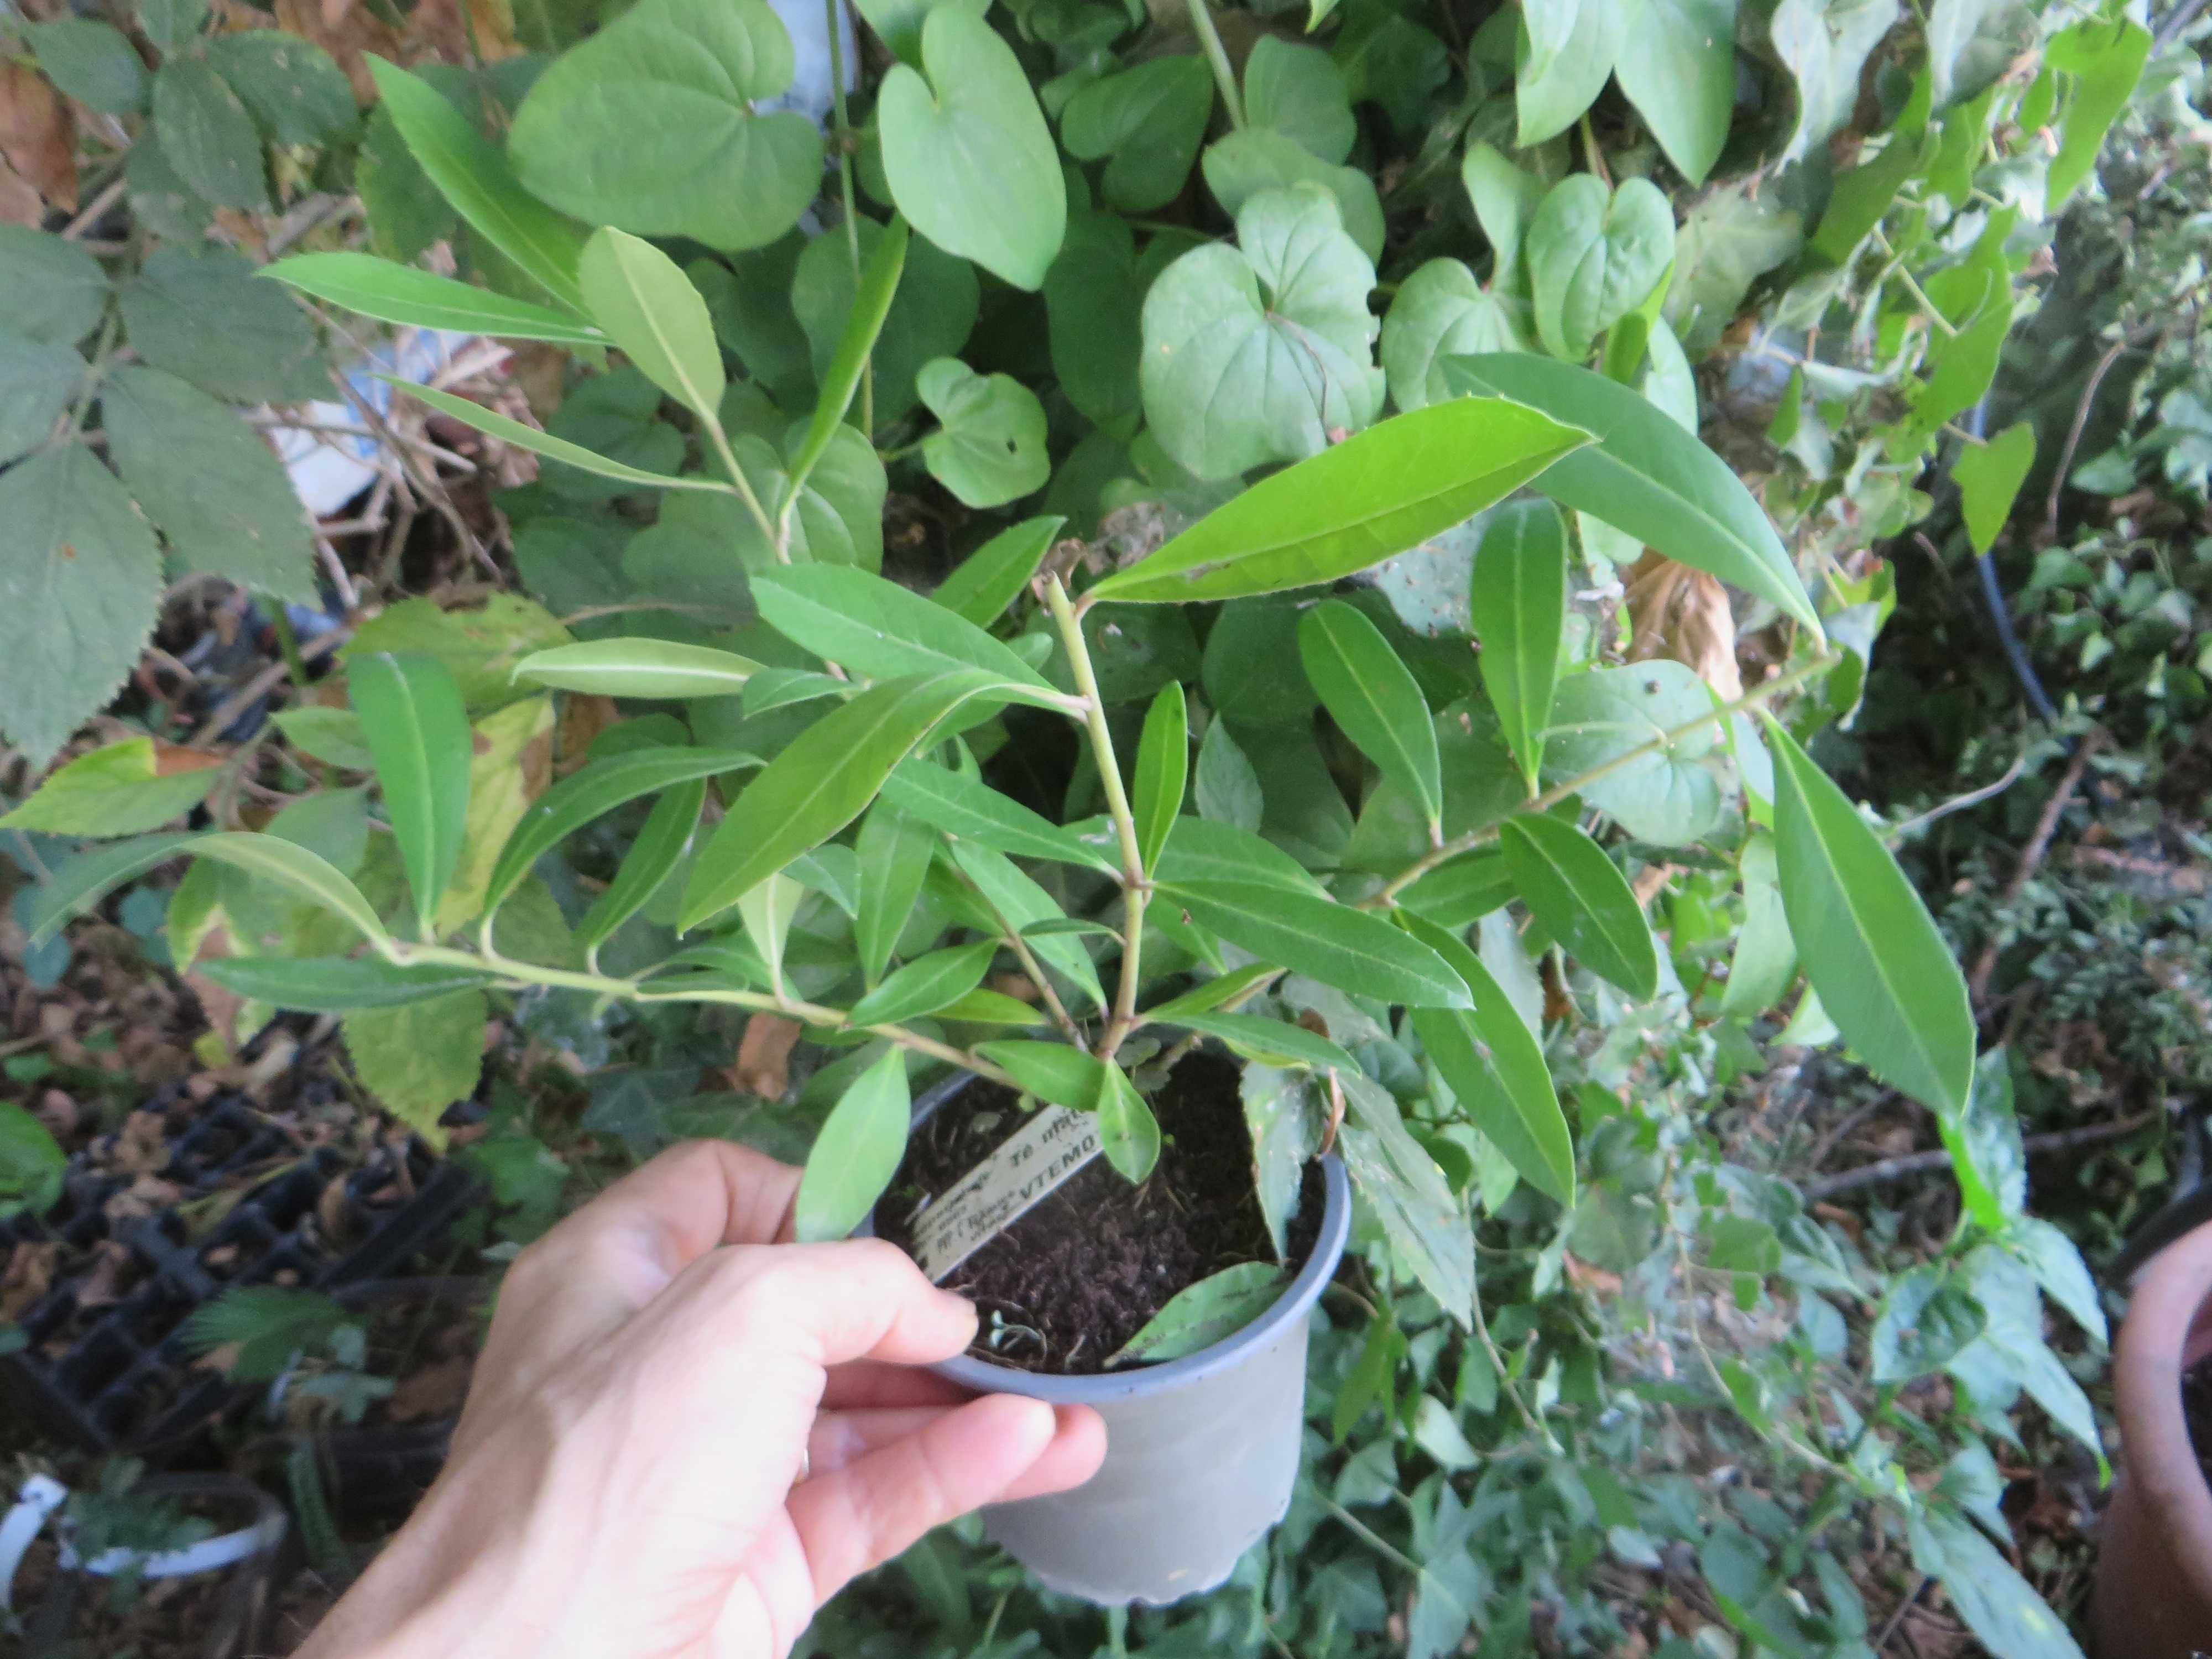 Planta de Chá Mate (Ilex paraguariensis) - muito raro